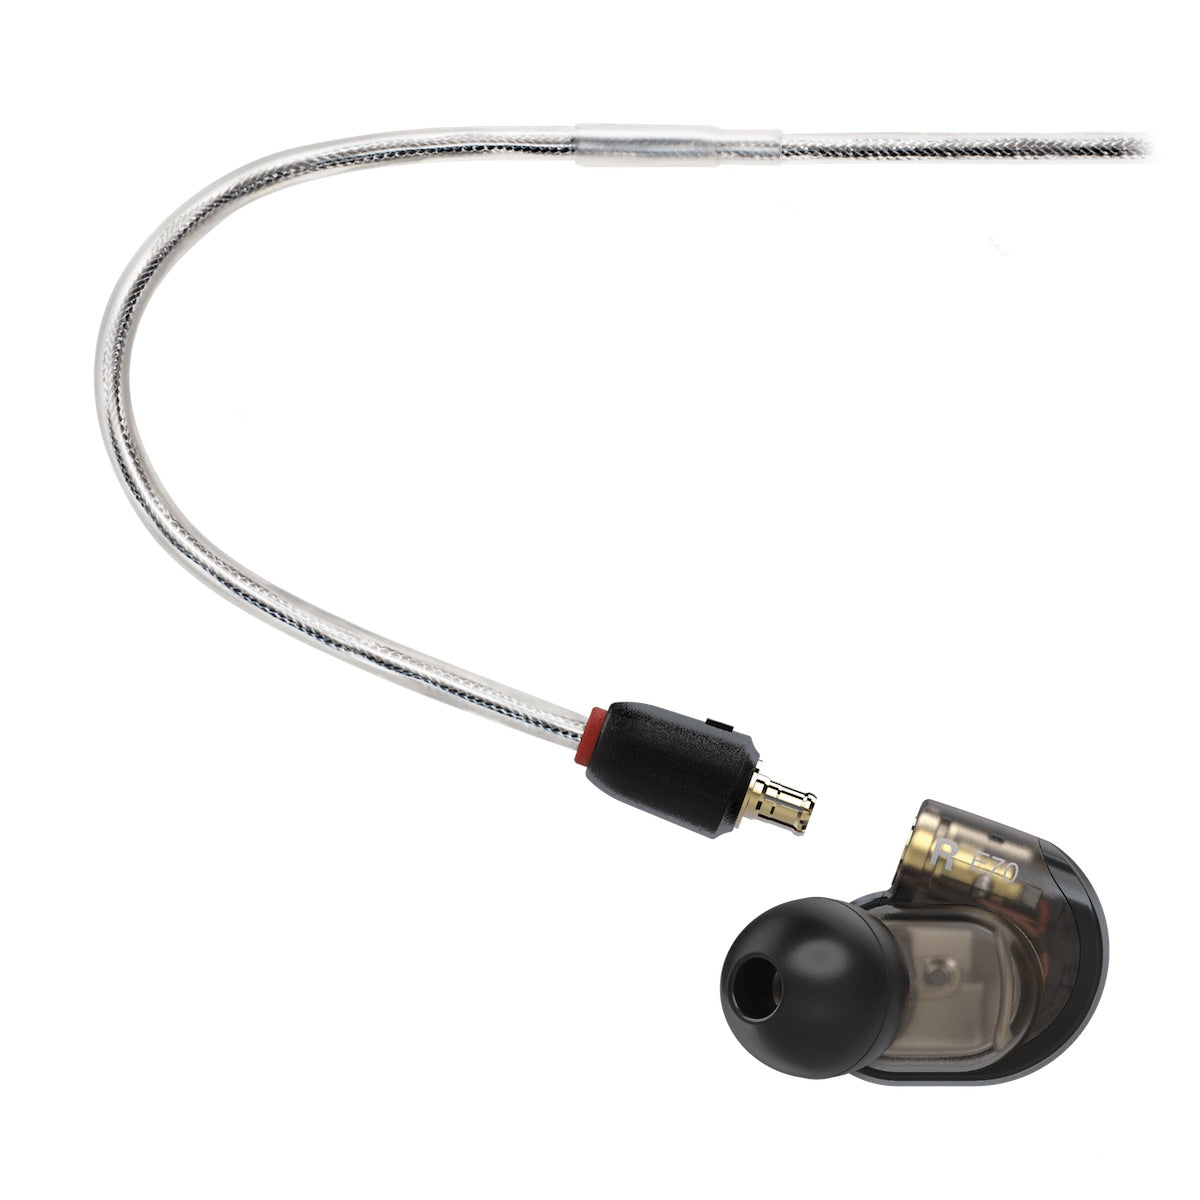 Audio-Technica ATH-E70 - Professional In-Ear Monitor Headphones, connector closeup